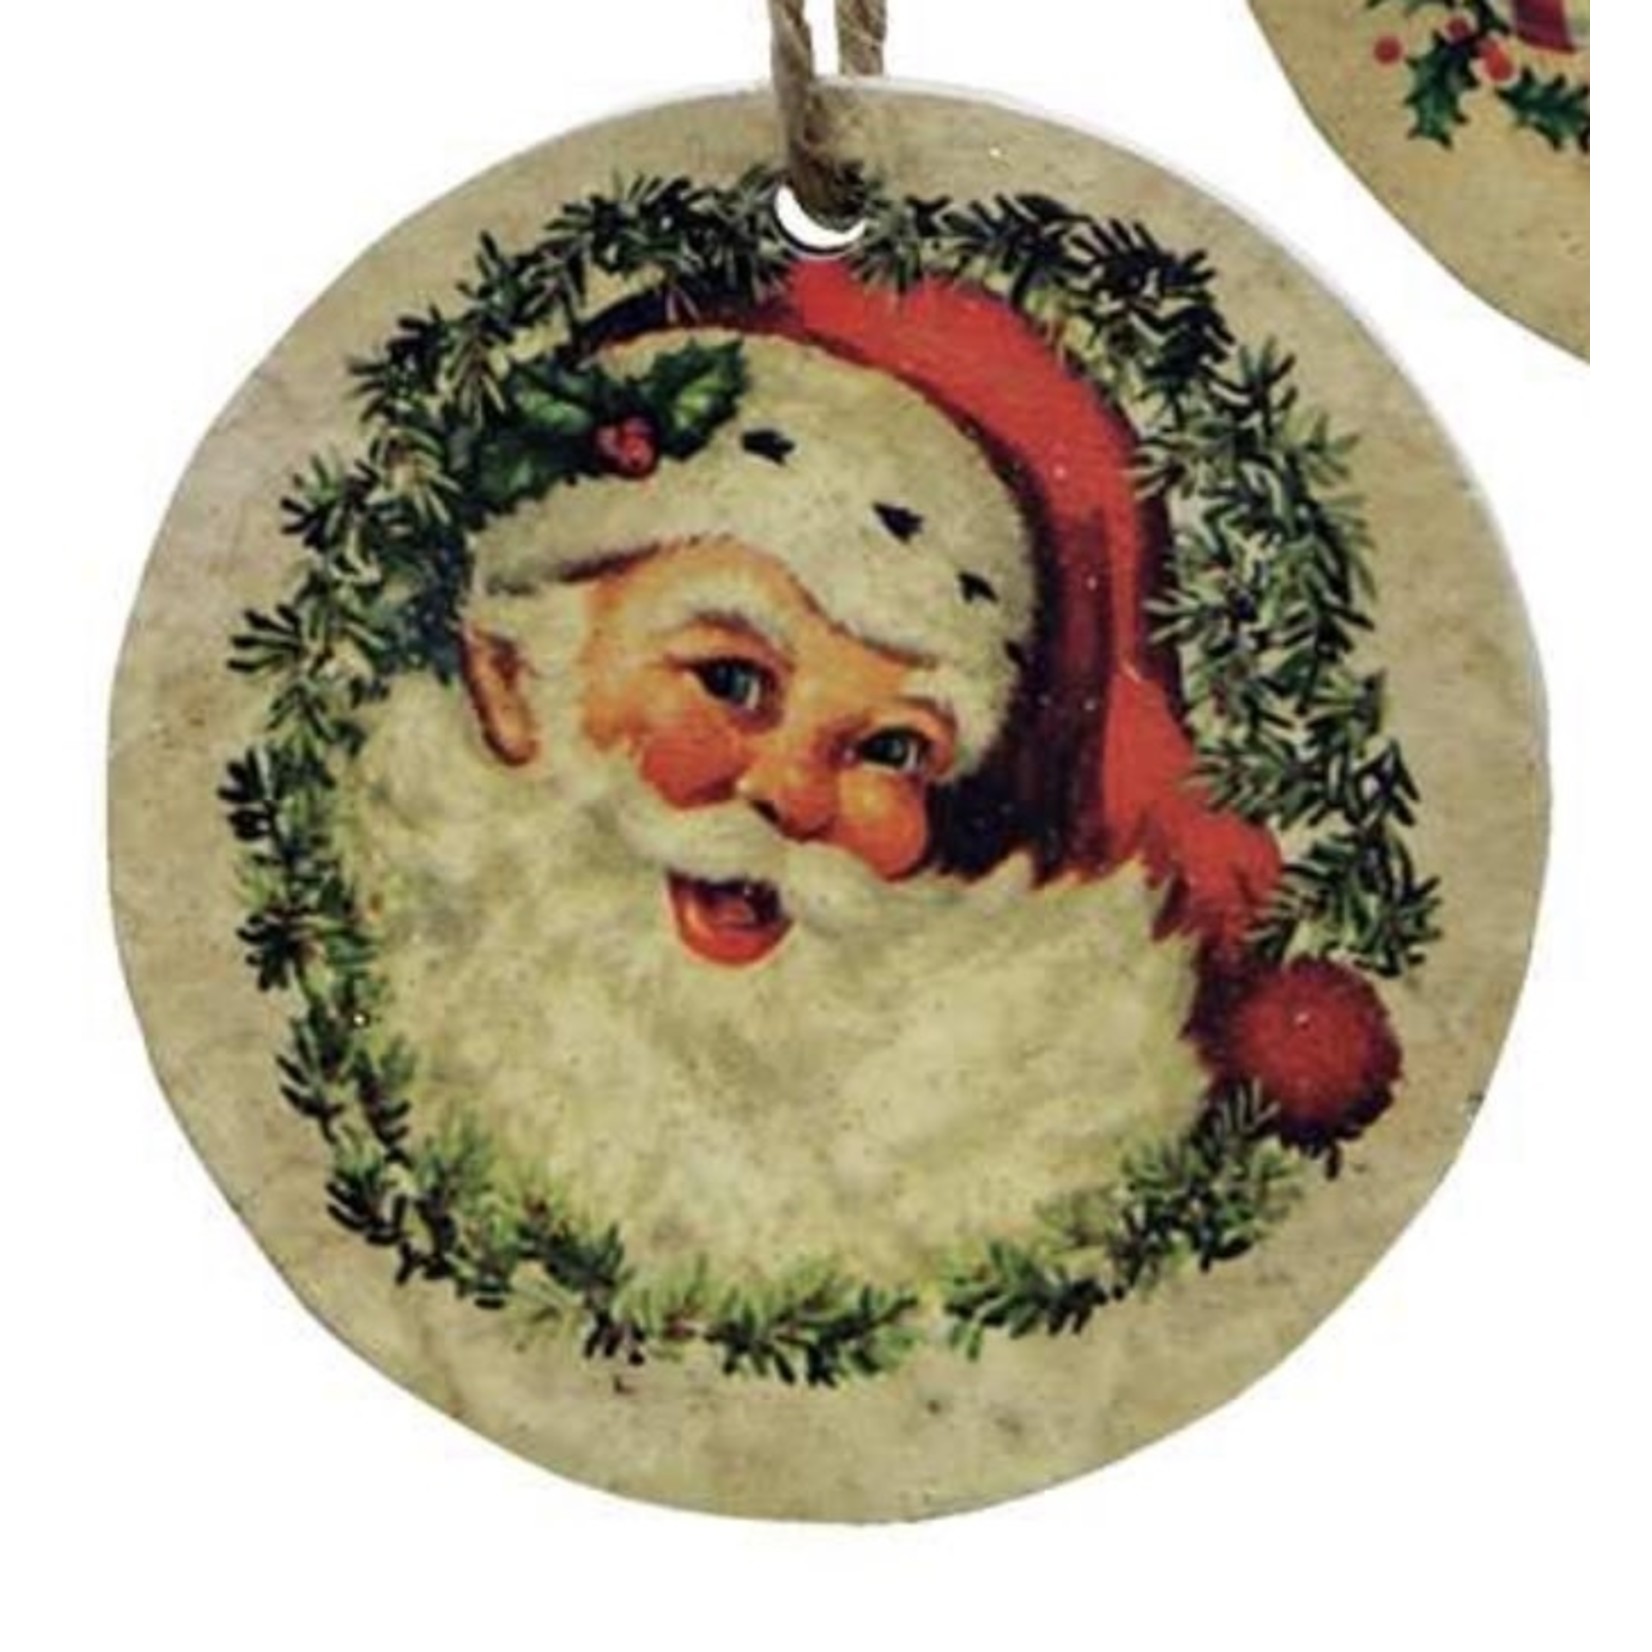 Hearthside Vintage Christmas Ornament